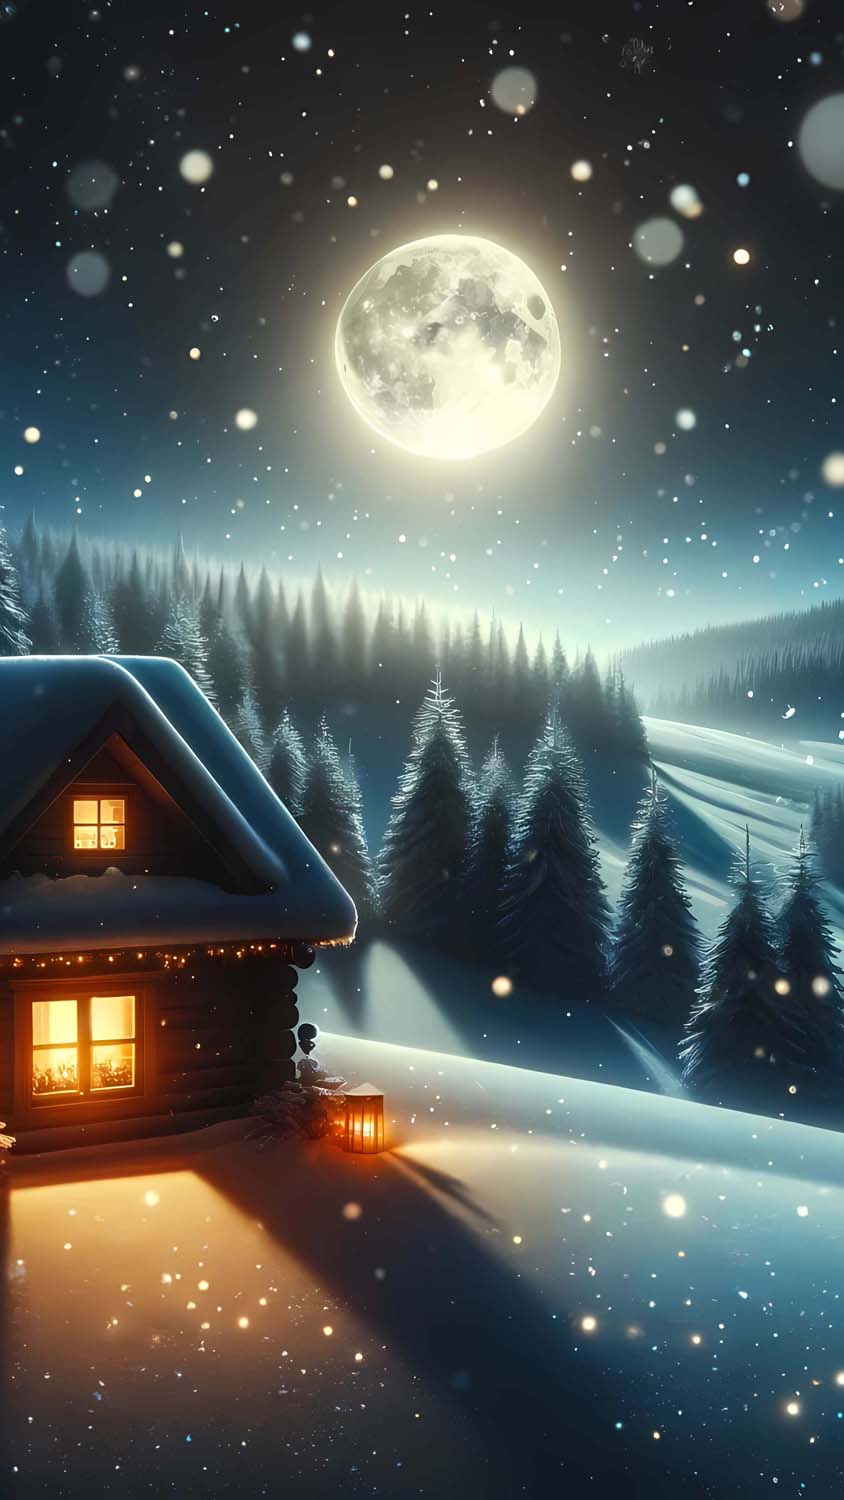 Winter Night Moon iPhone Wallpaper